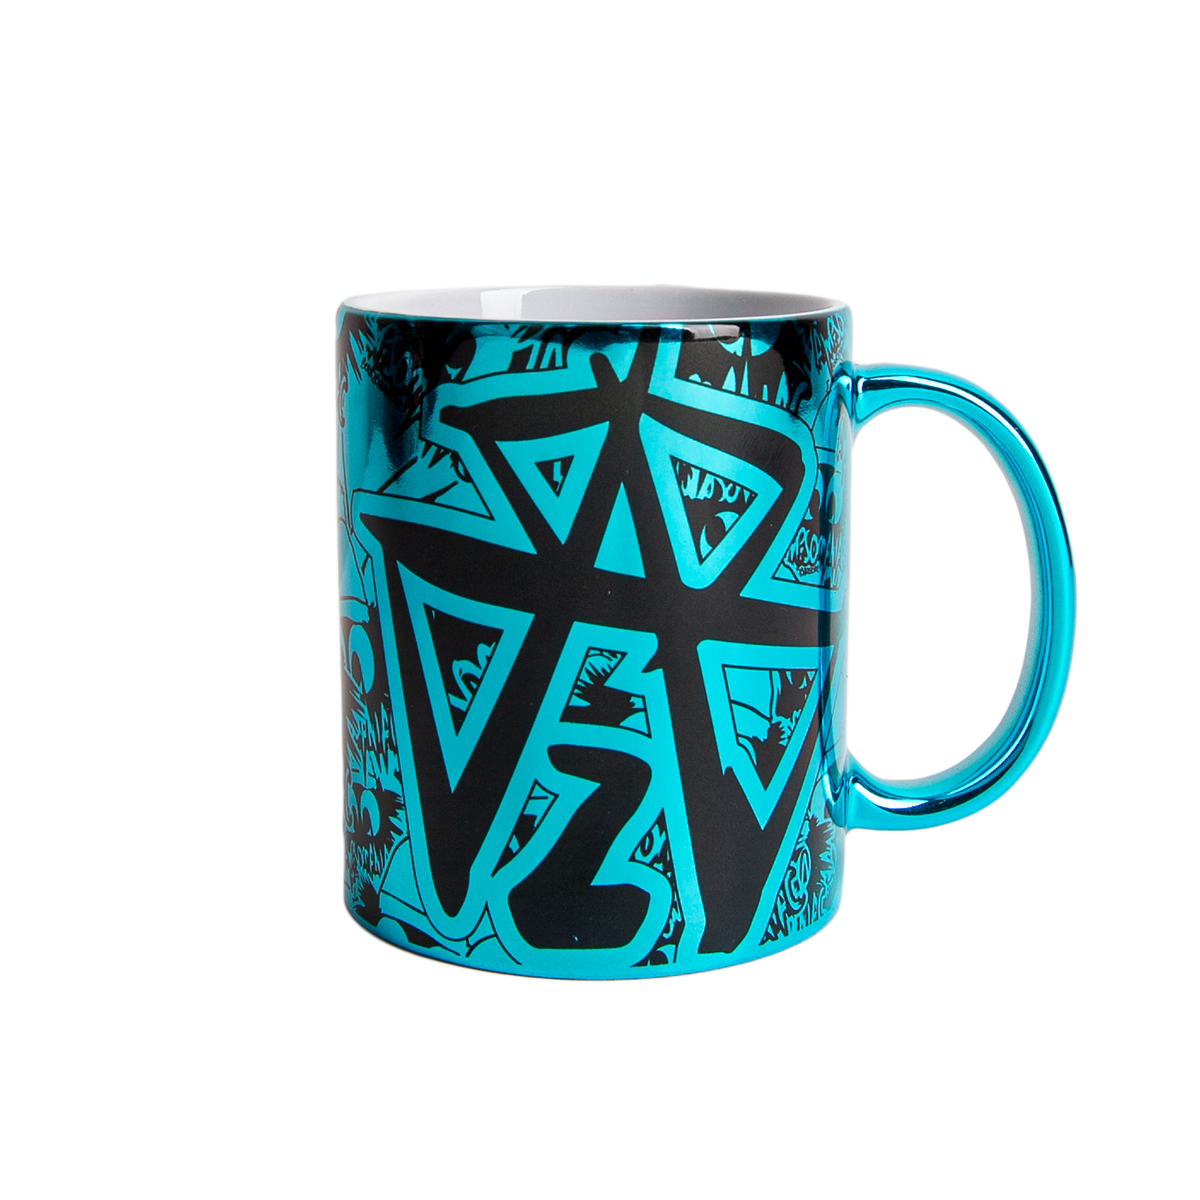 Coffee Cup "Awesomaniac23" Blue